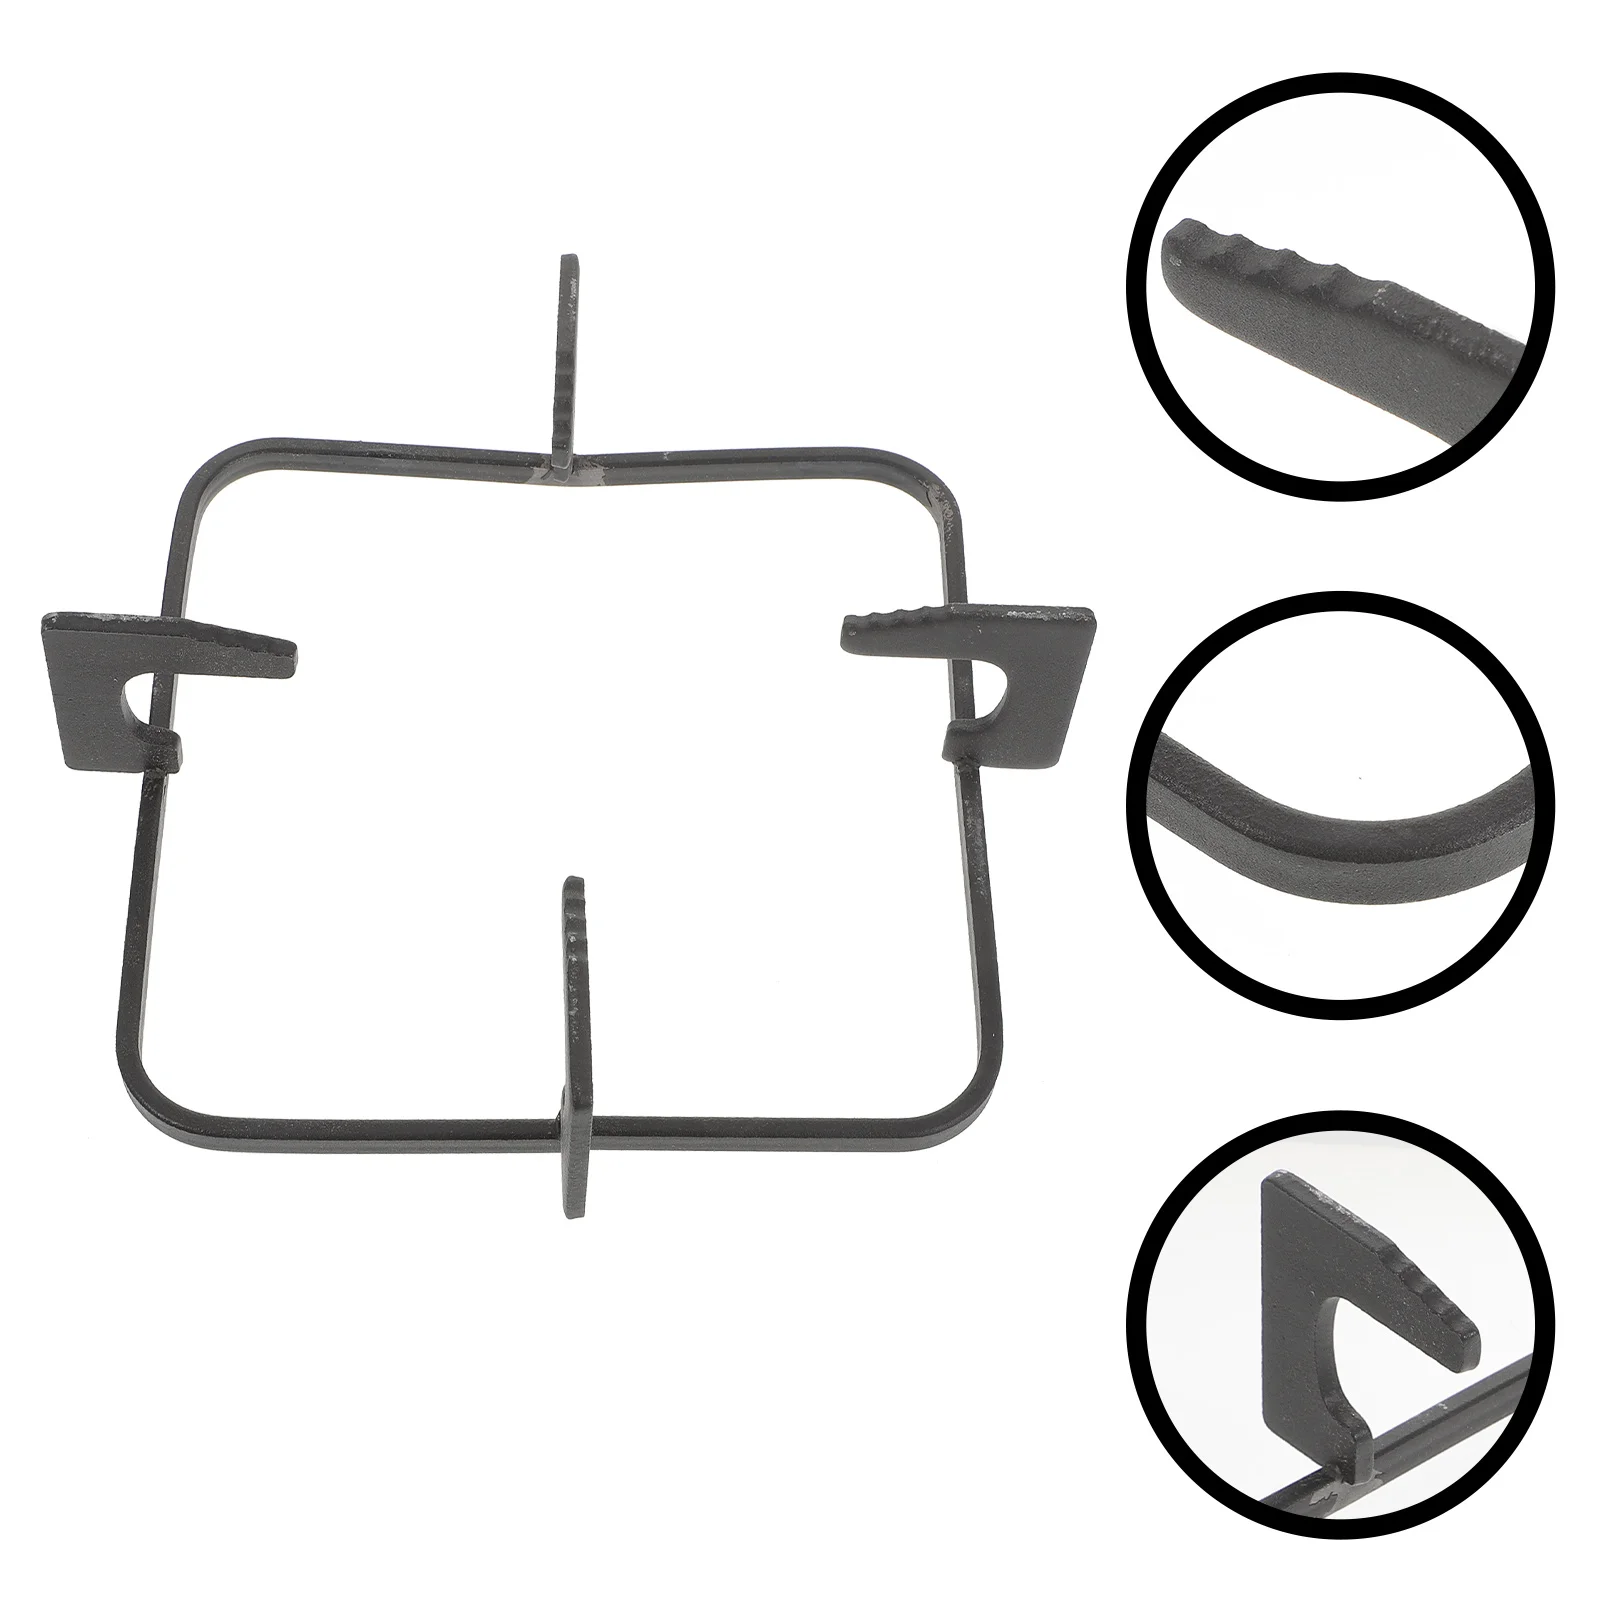 

Stove Wok Gas Rack Stand Ring Pot Support Trivet Burner Cooktop Steel Bracket Holder Iron Racks Grates Grate Pan Accessories